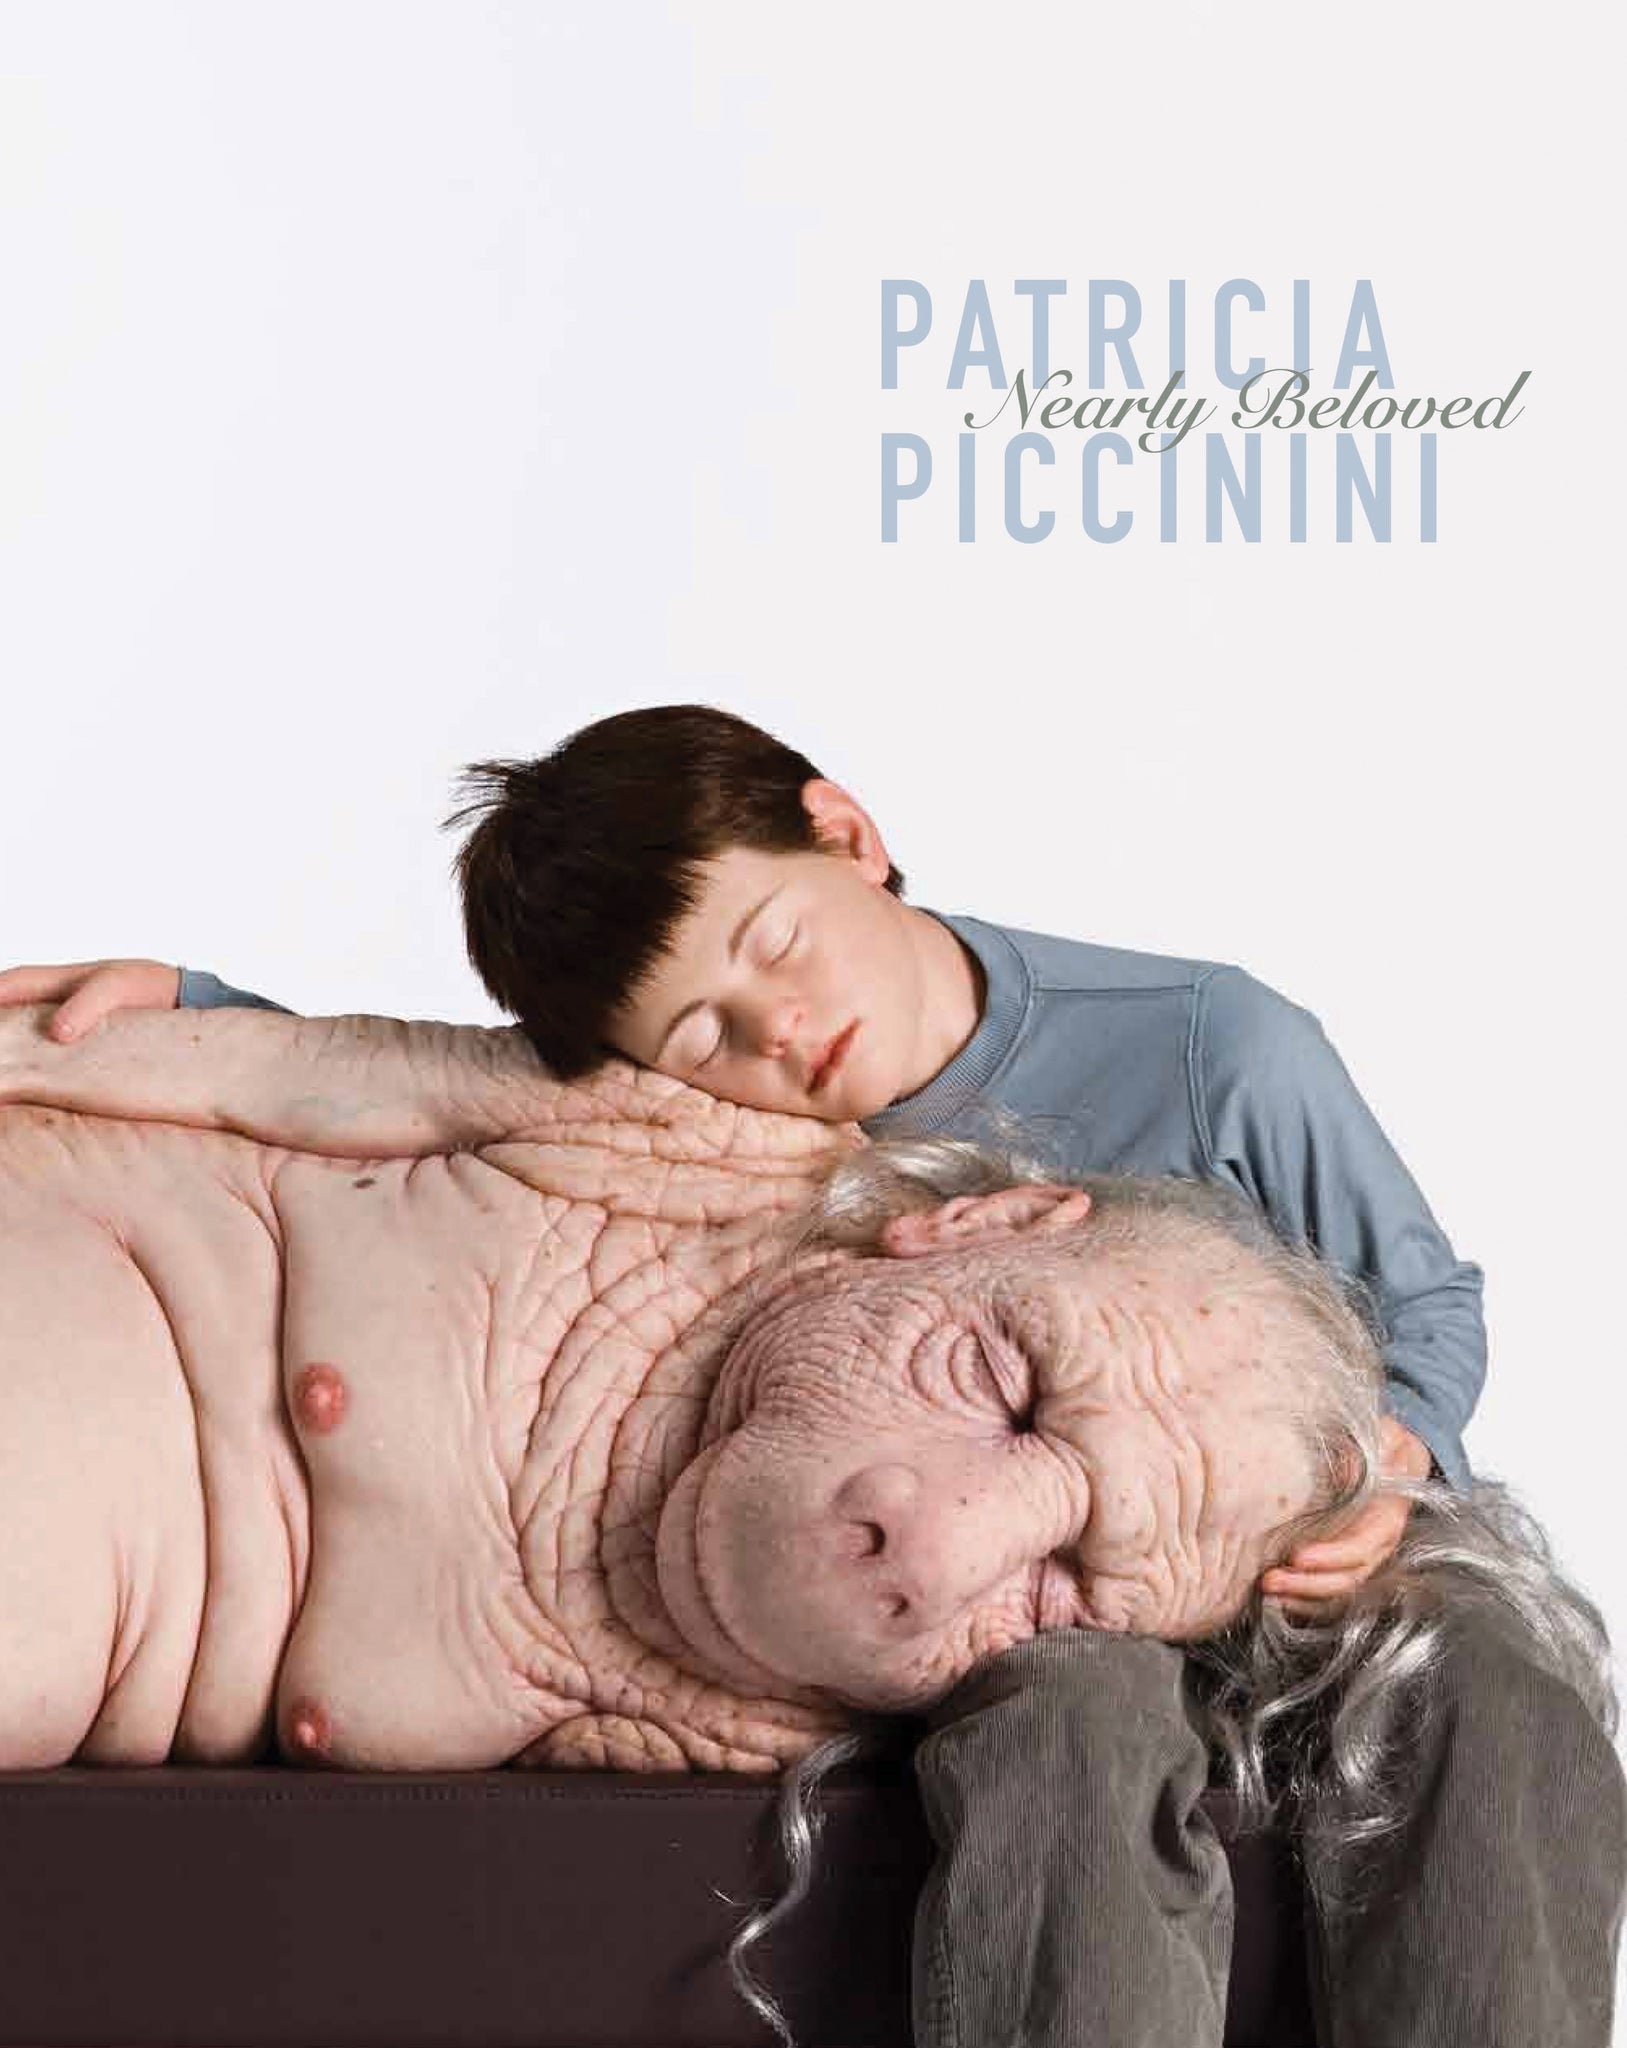 Patricia Piccinini: Nearly Beloved